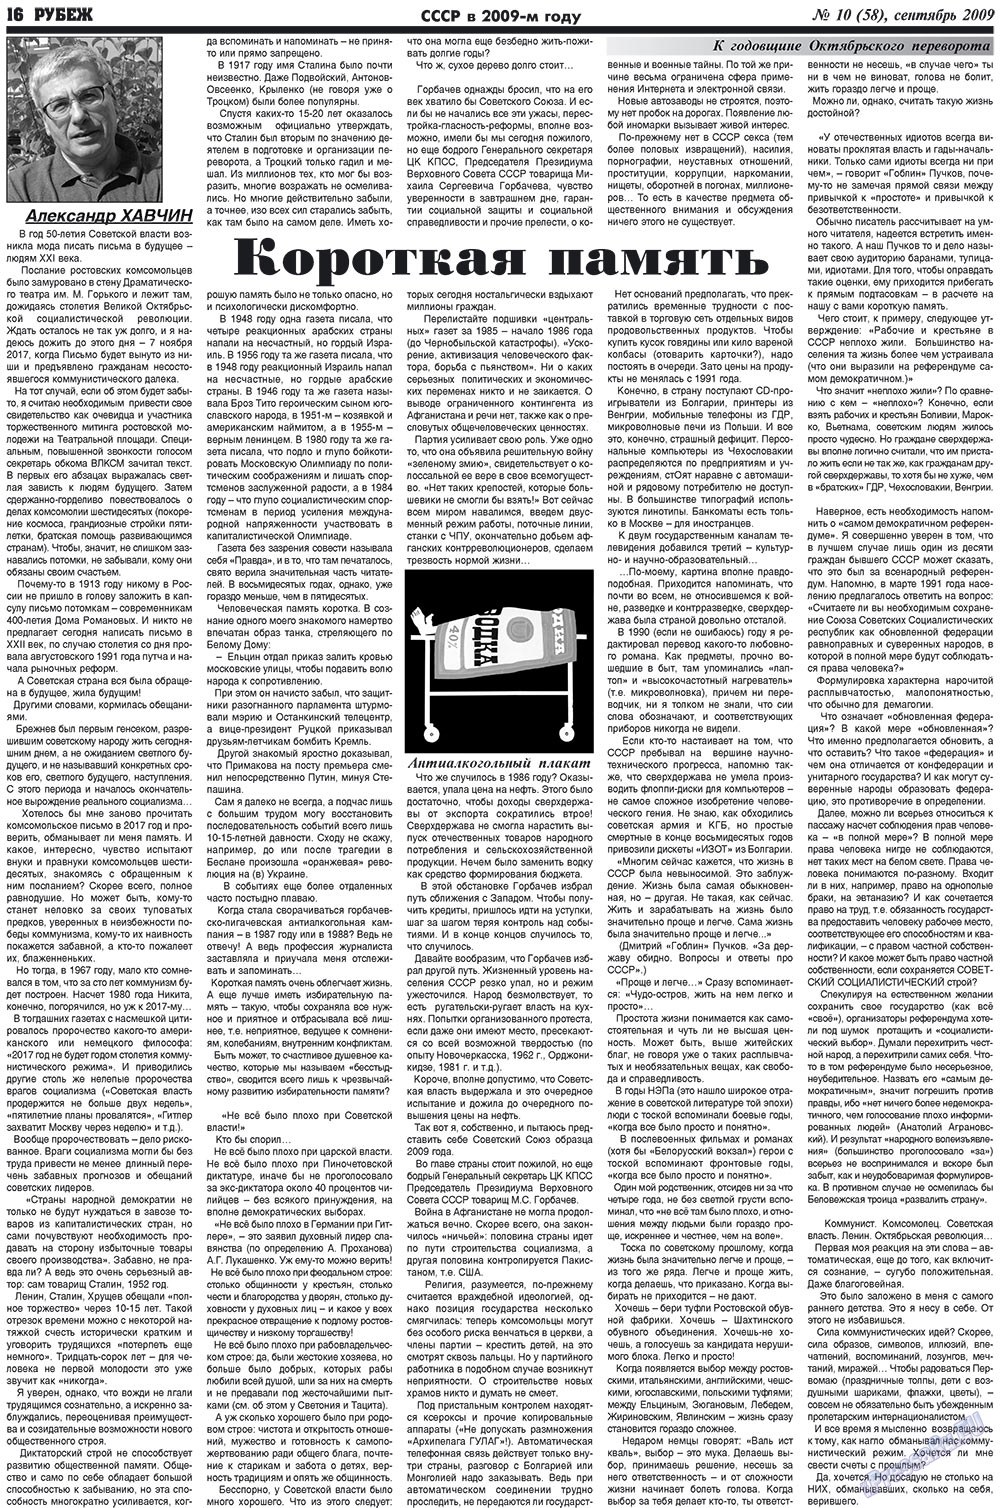 Рубеж, газета. 2009 №10 стр.16